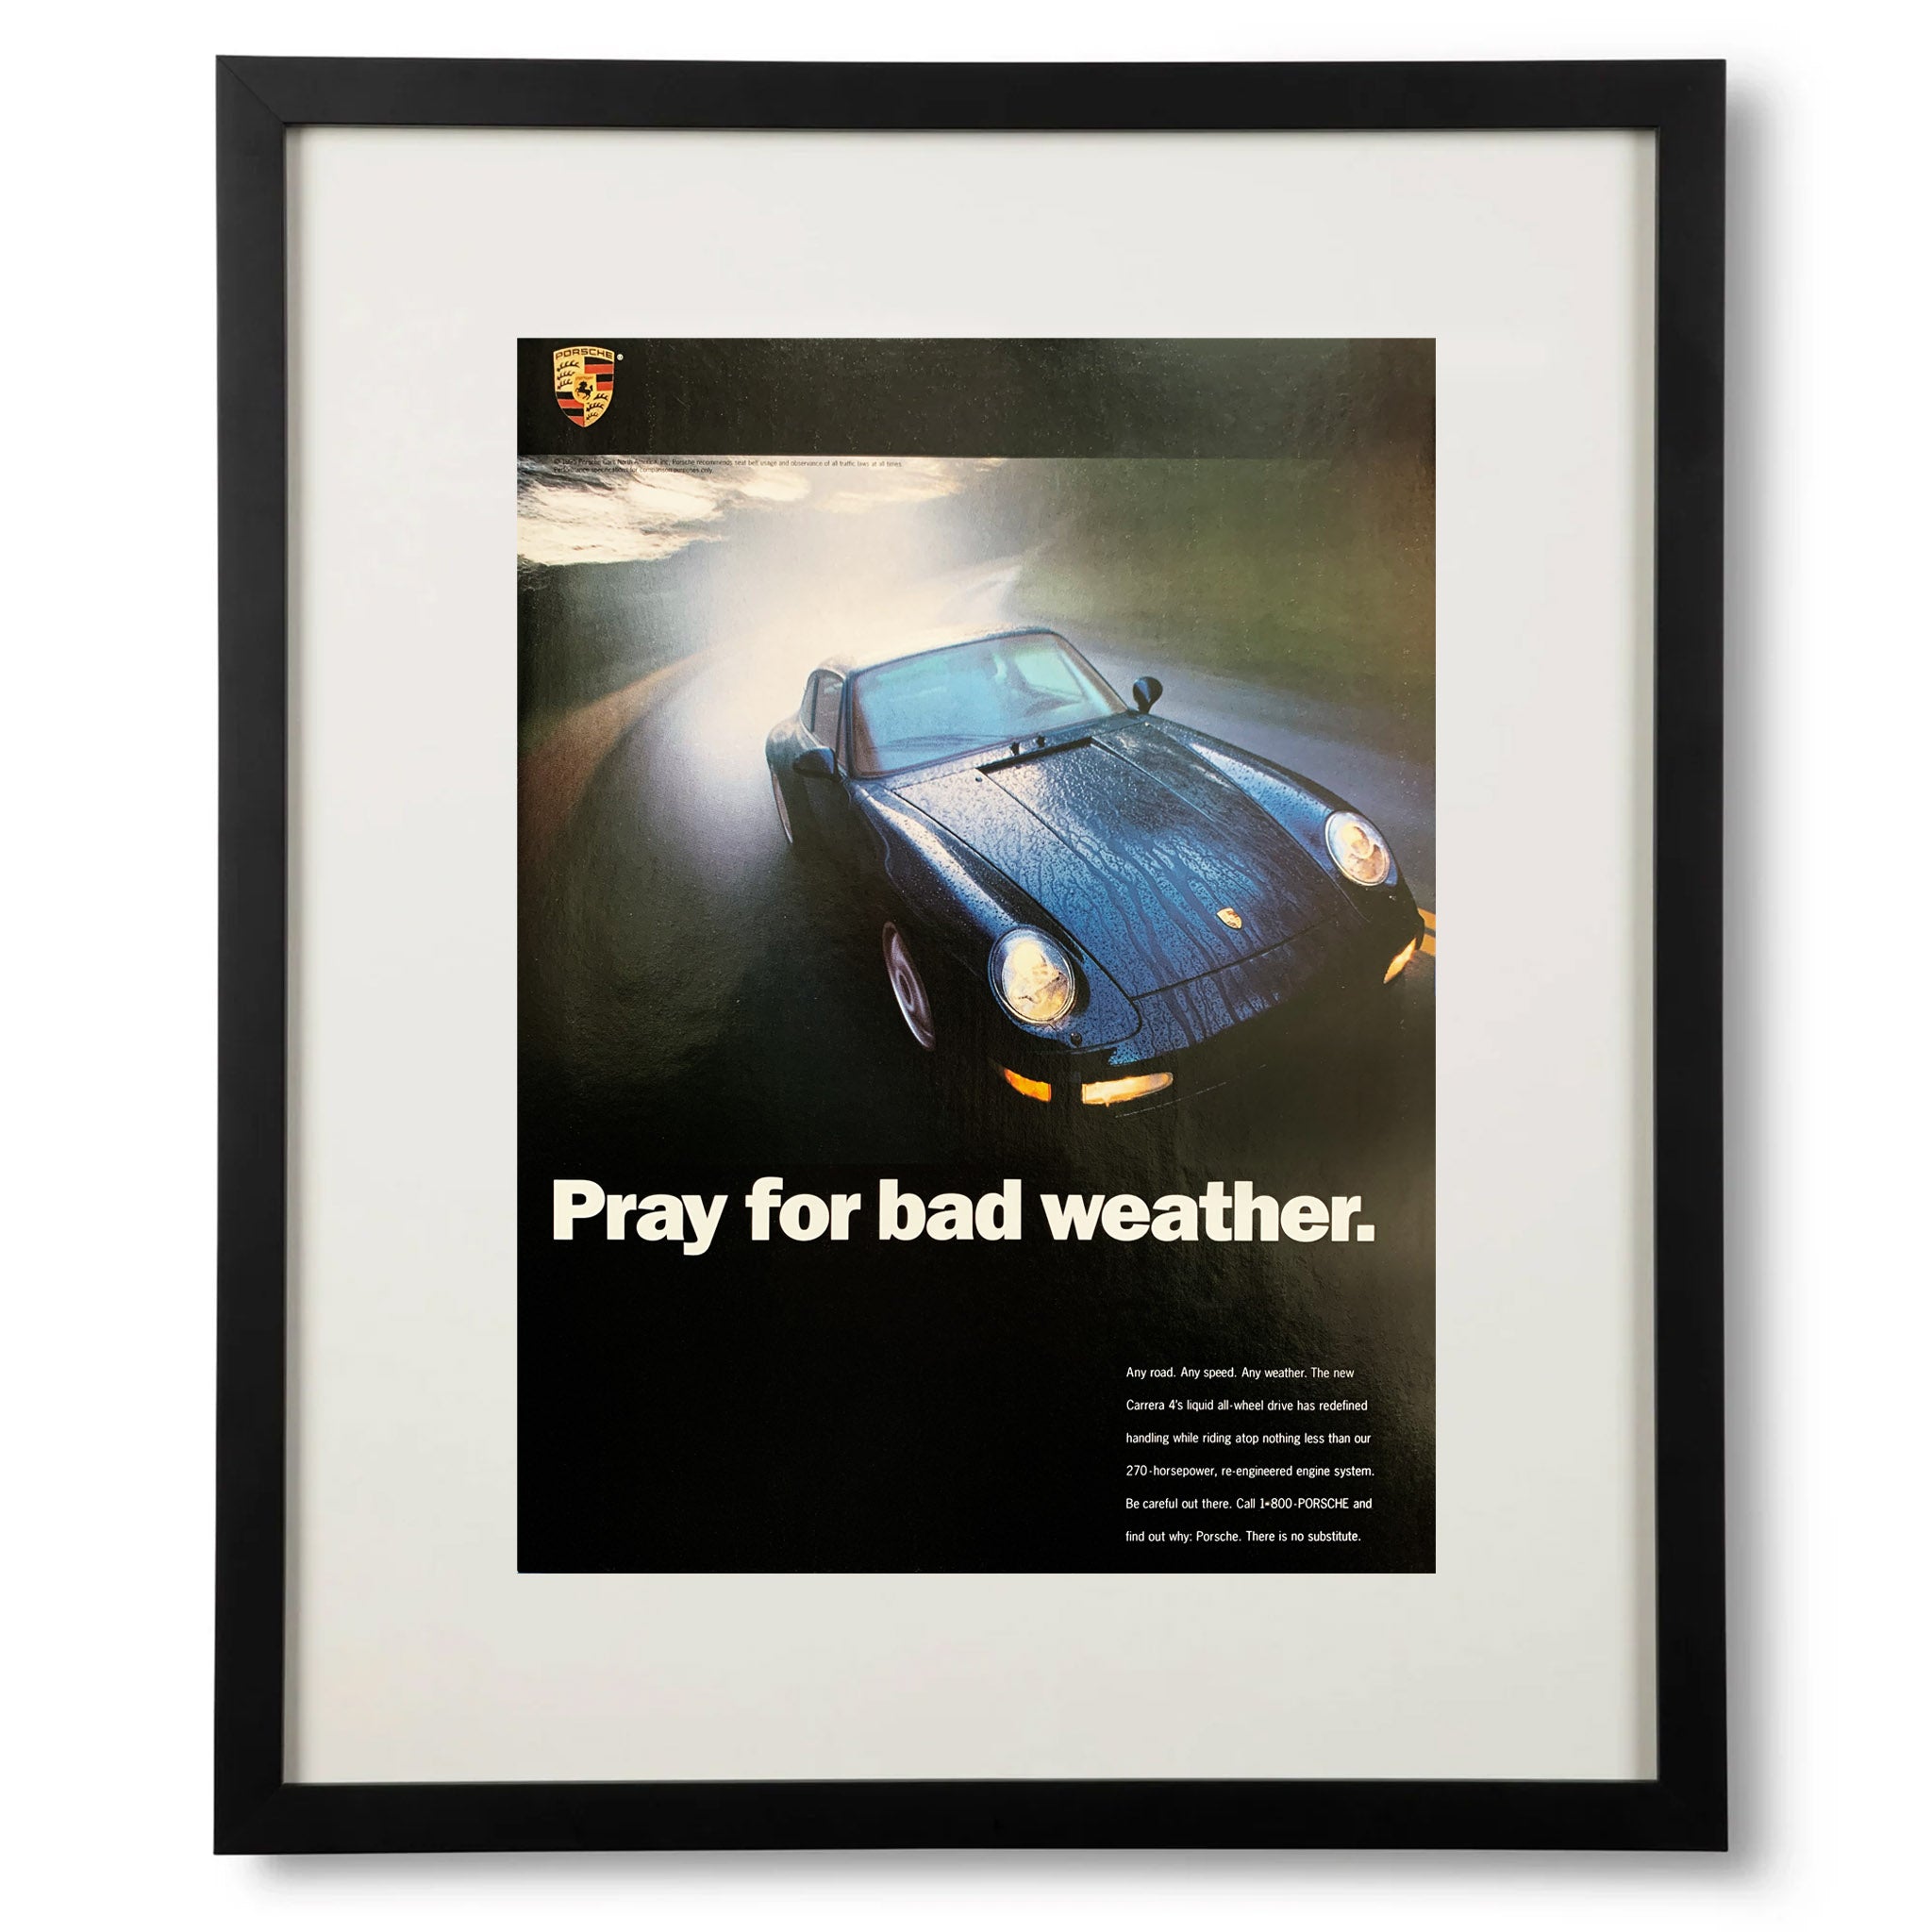 Framed Porsche 993 Pray for Bad Weather Advertisement